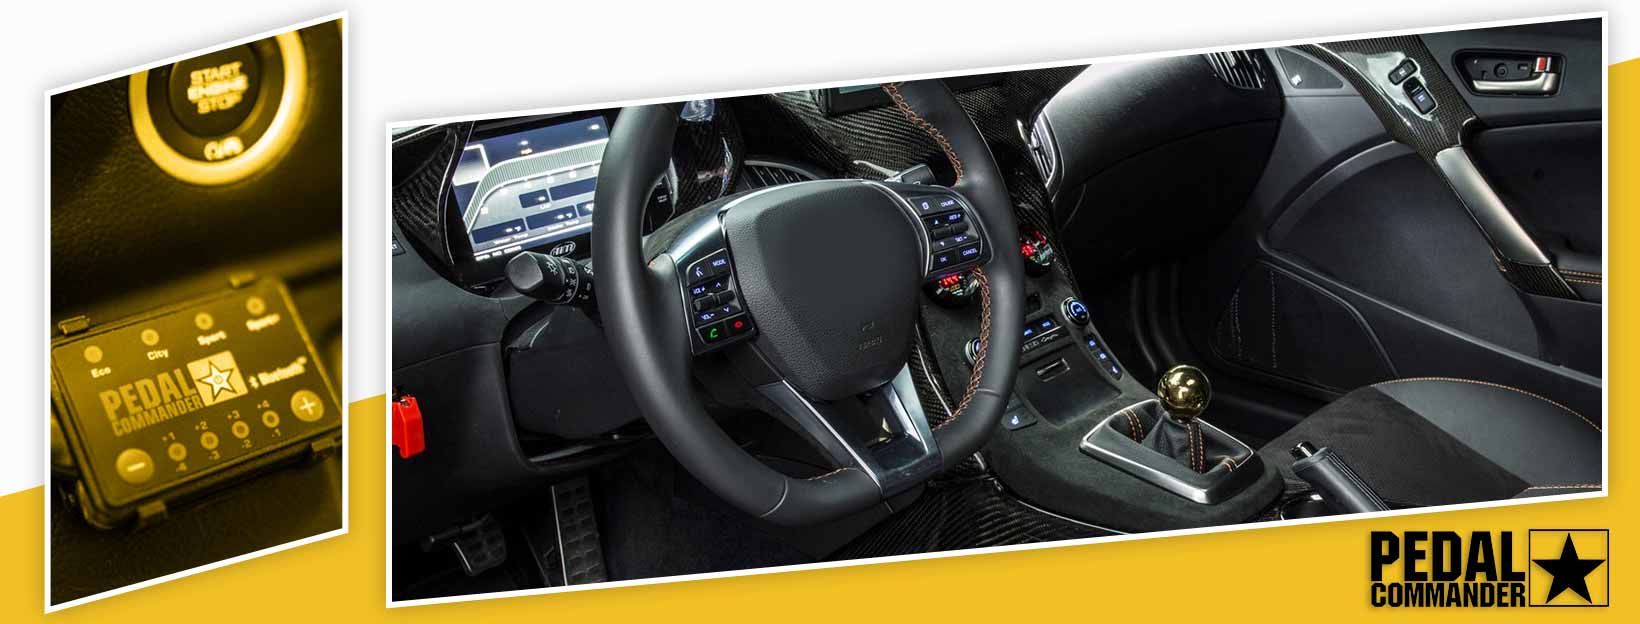 Pedal Commander for Hyundai Genesis Coupe - interior